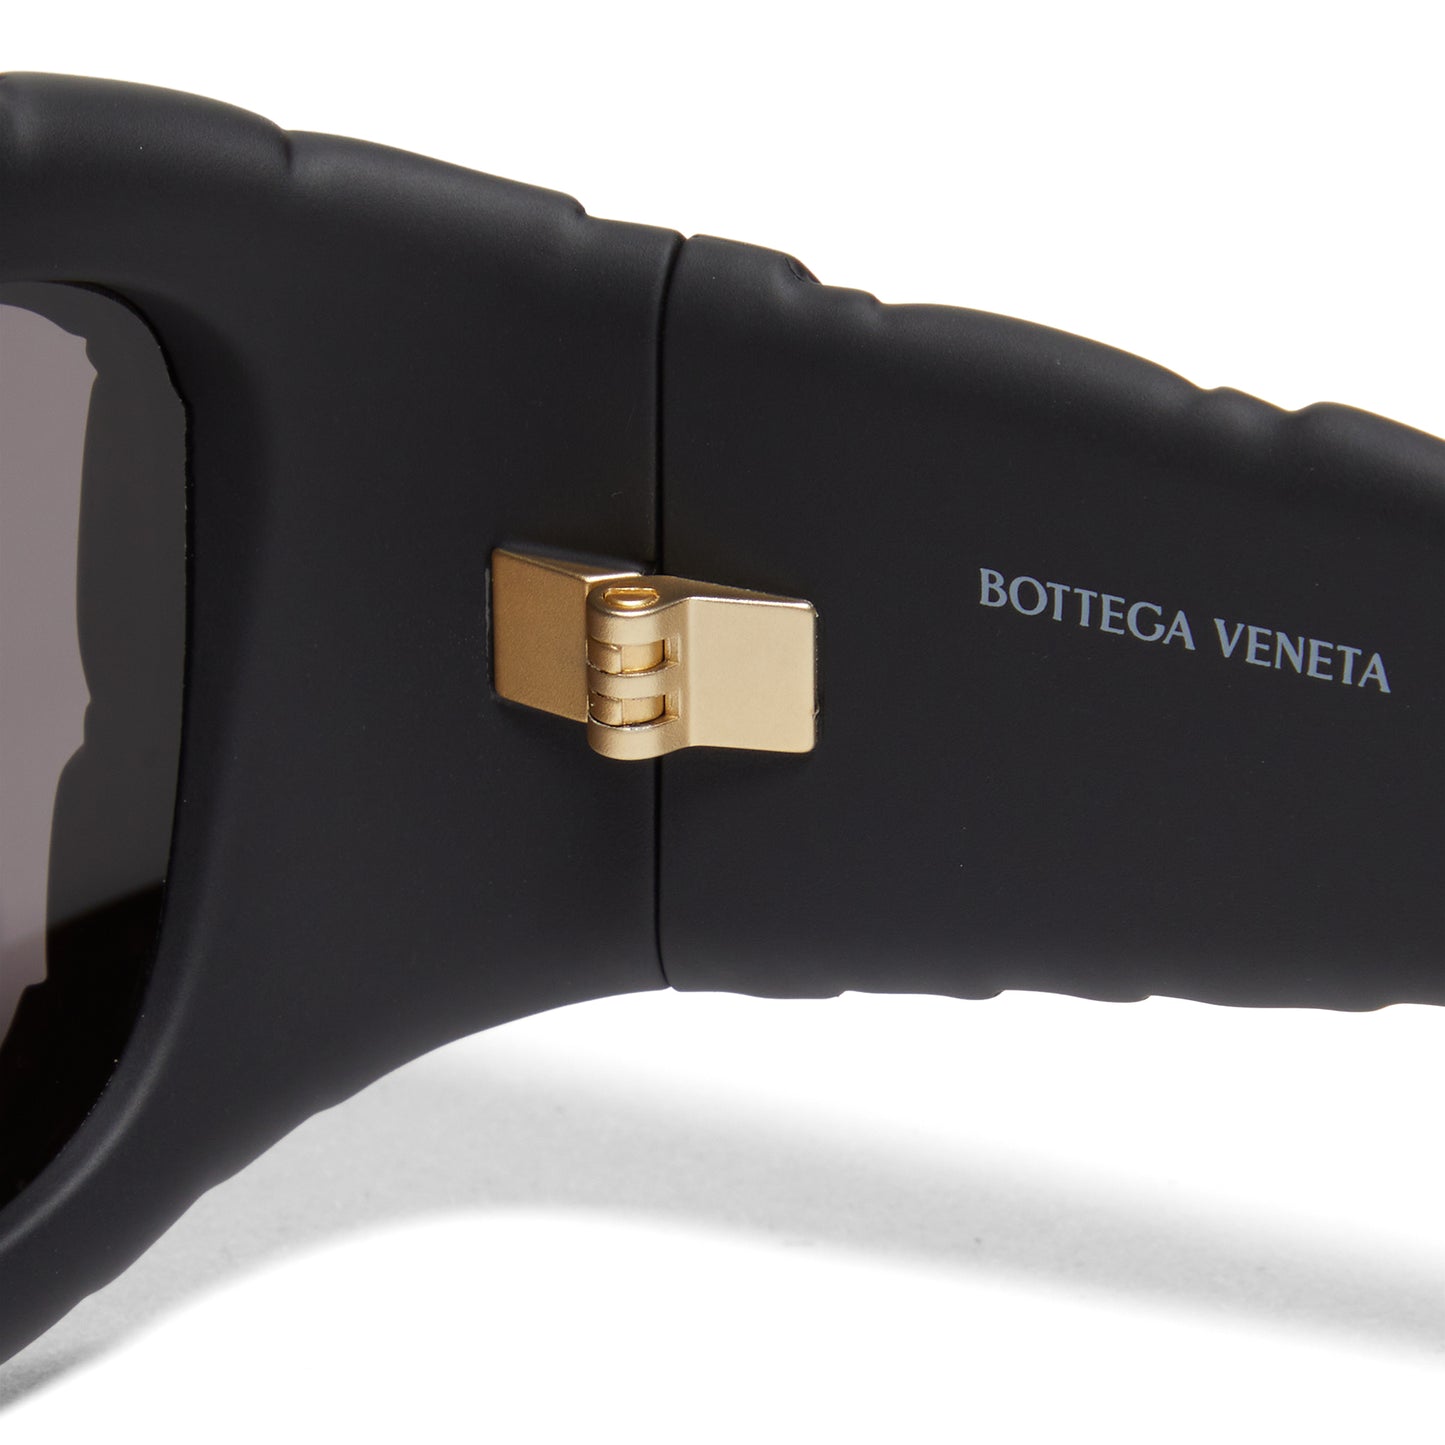 Bottega Veneta Sunglasses (Black/Grey)